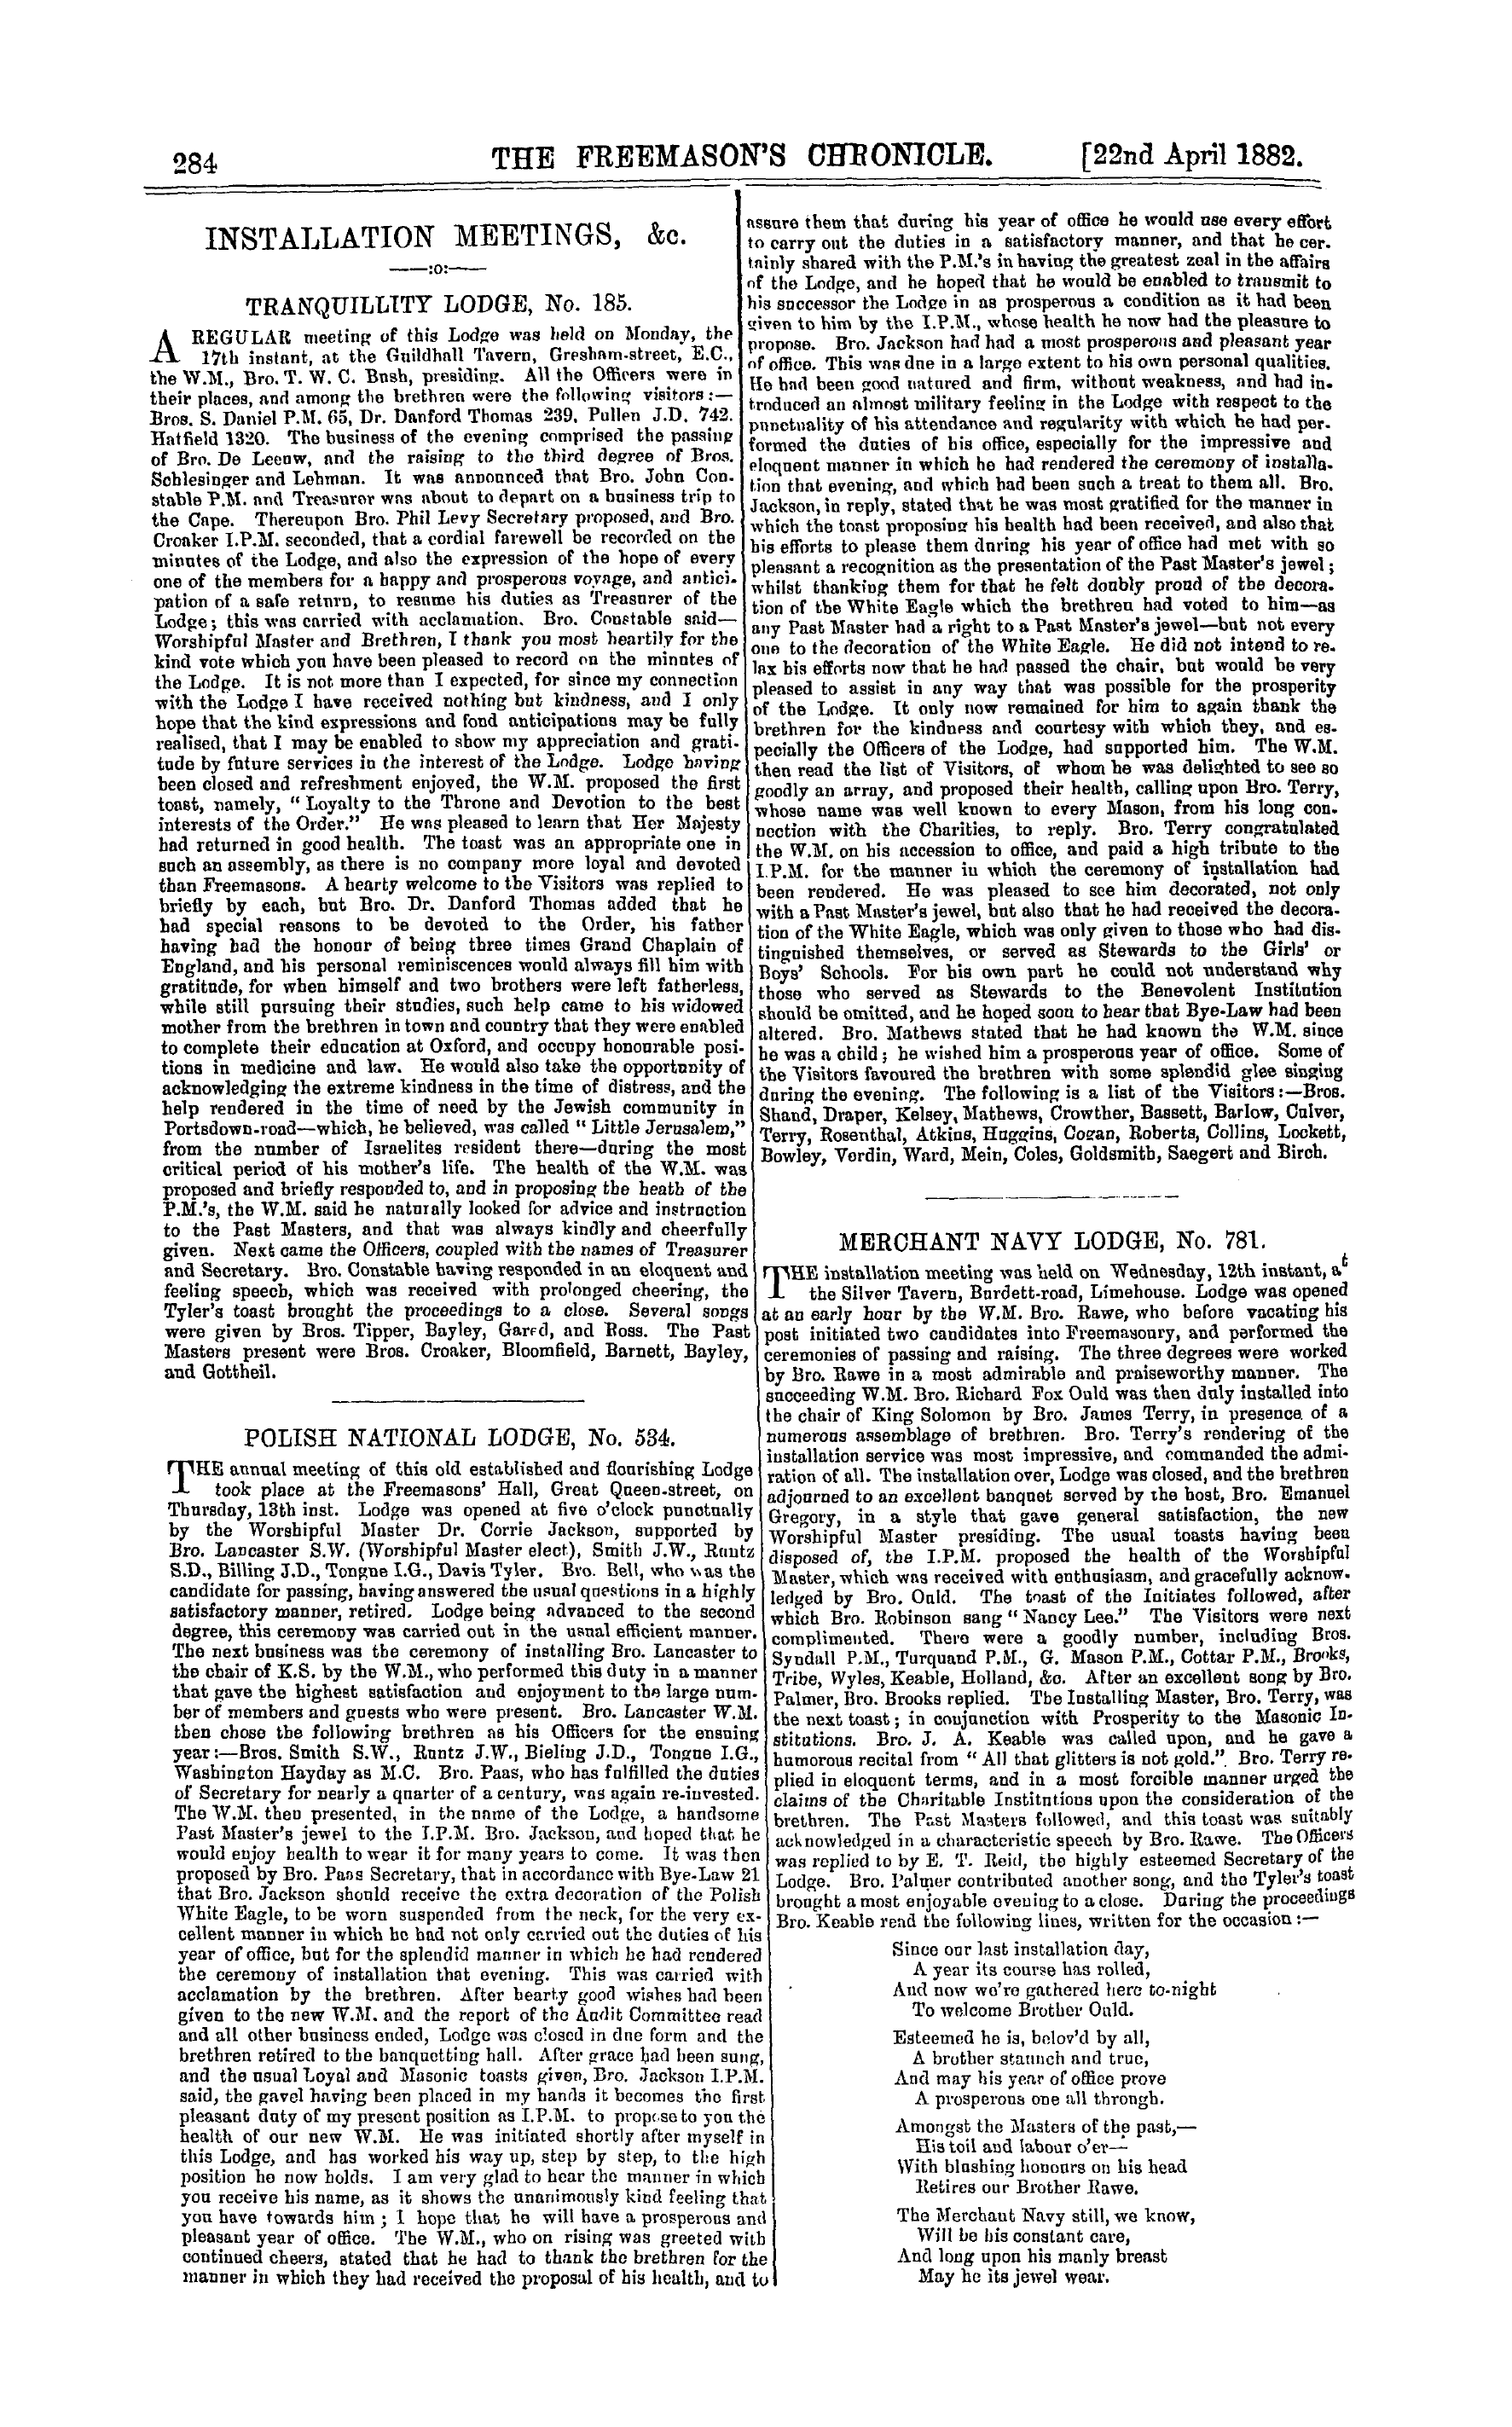 The Freemason's Chronicle: 1882-04-22: 12